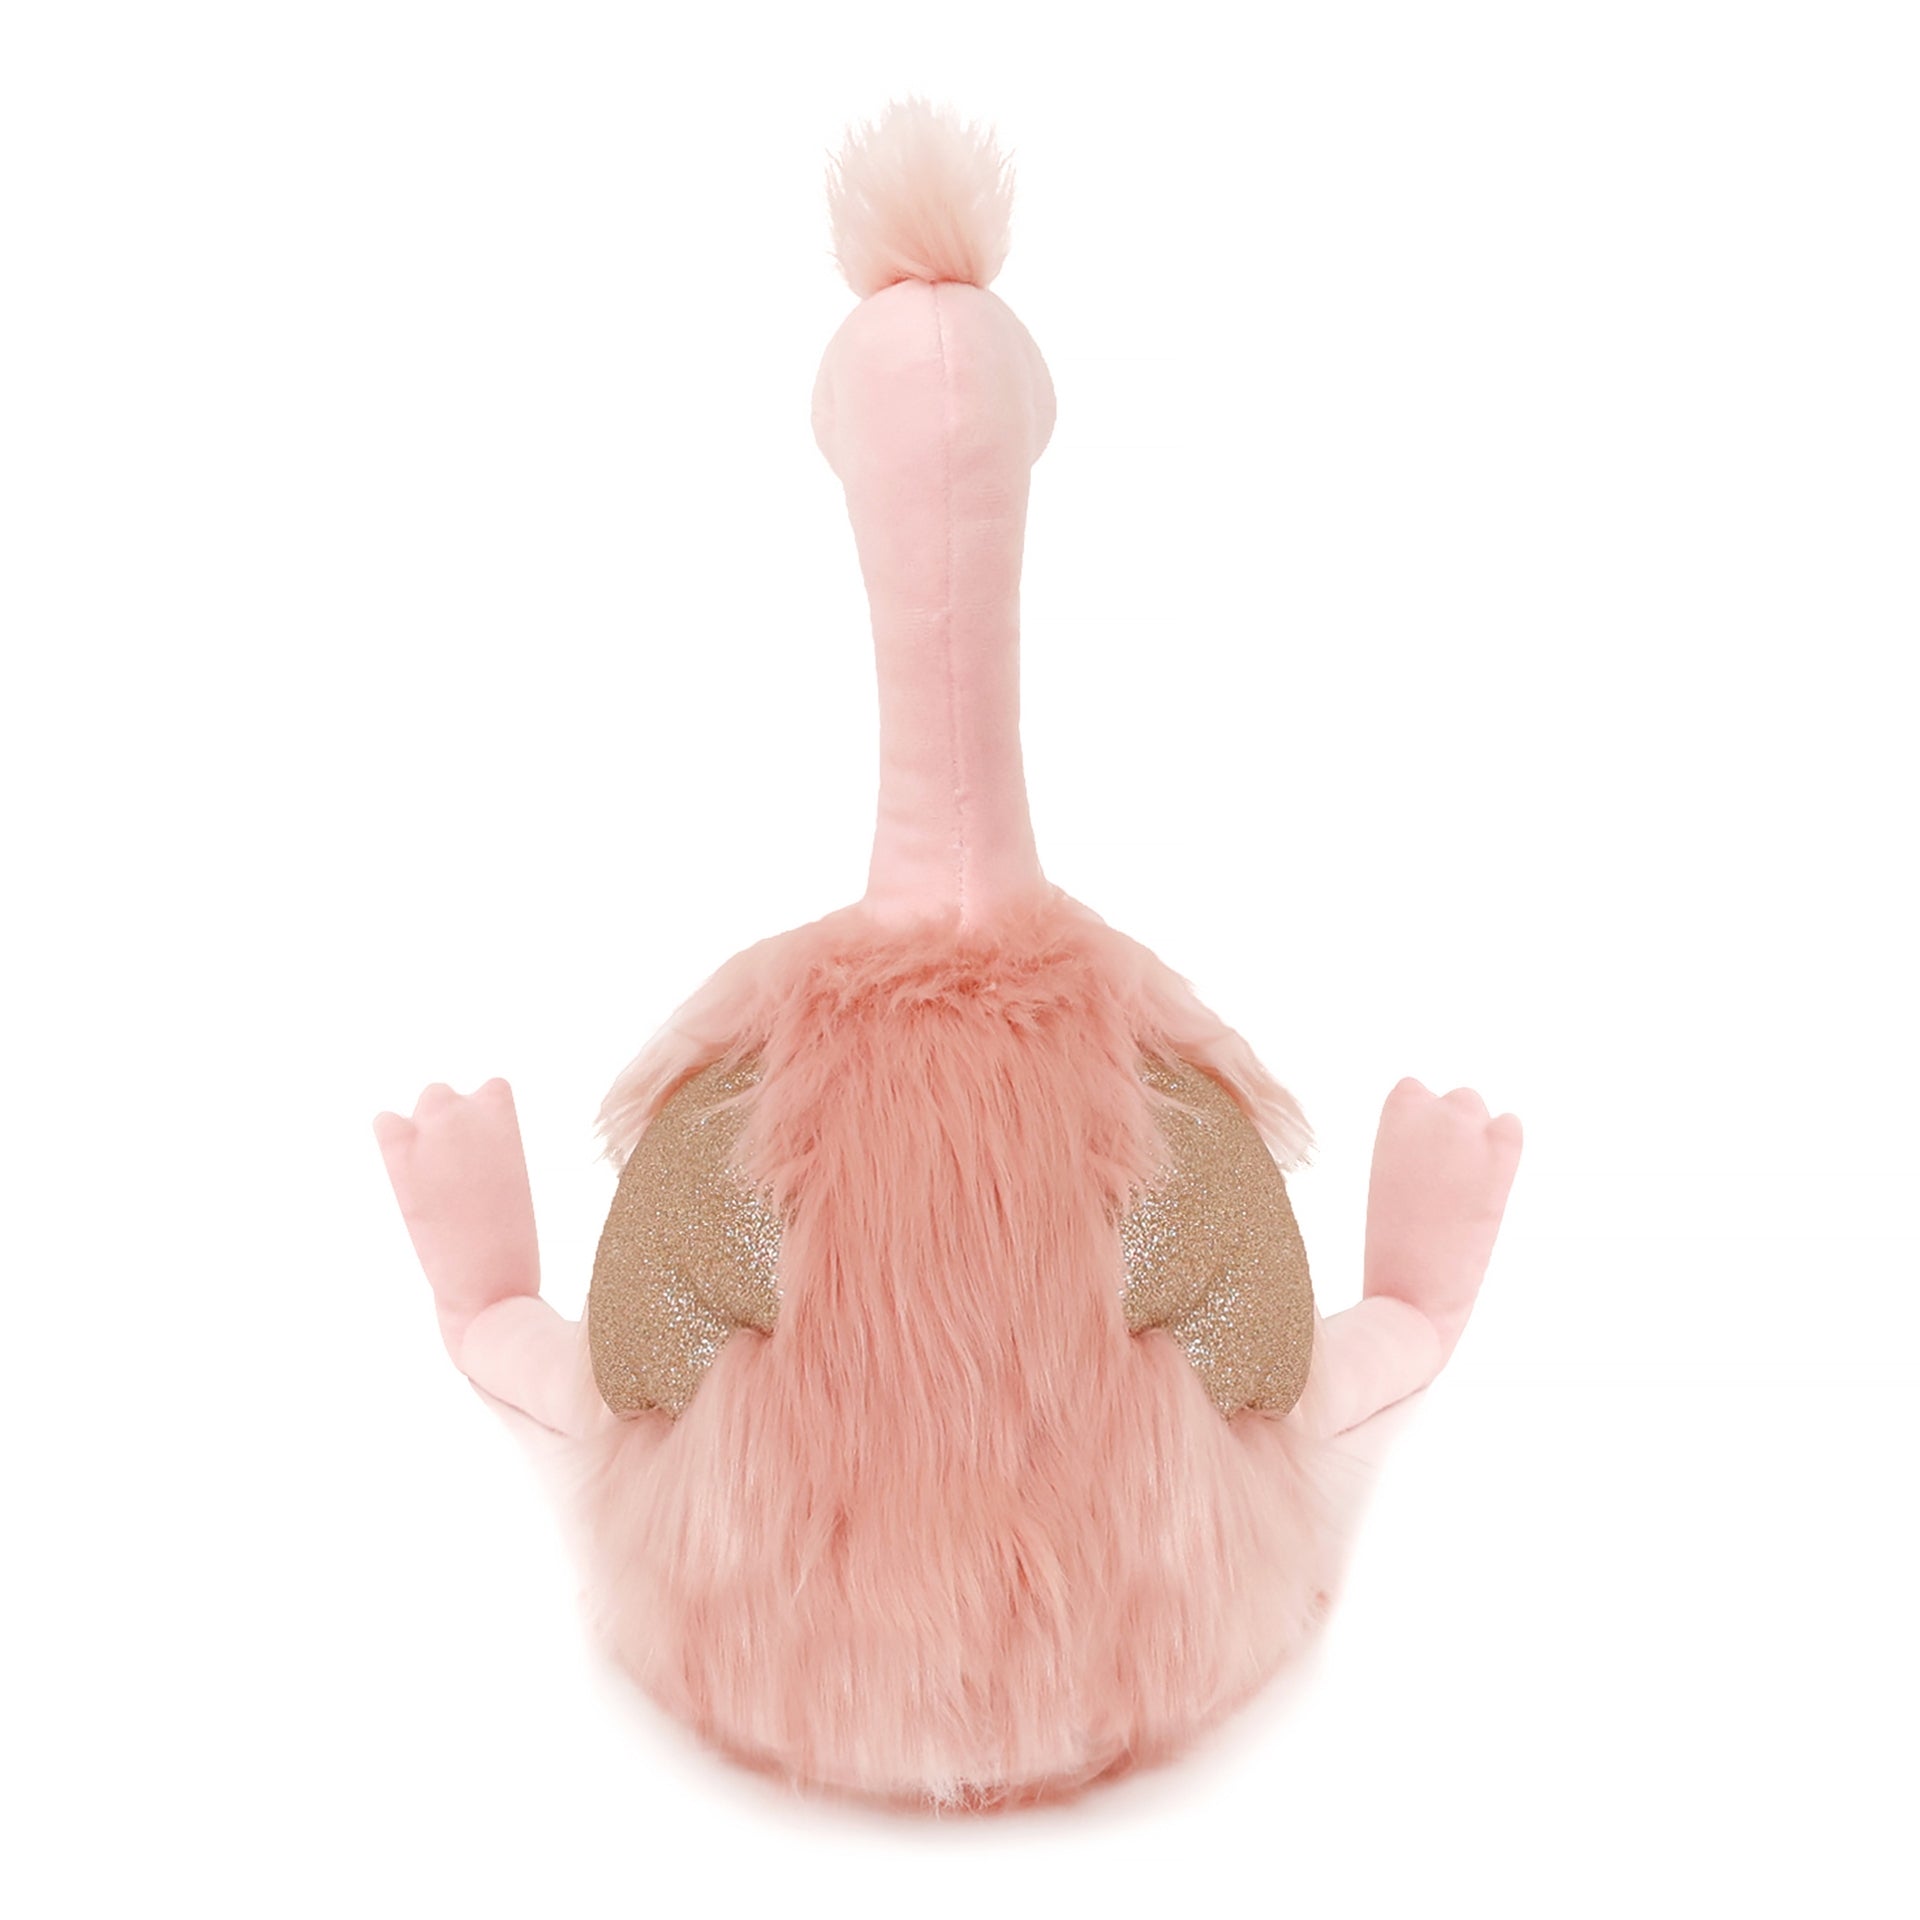 gloria flamingo stuffed animal toy, Designed by OB in Australia